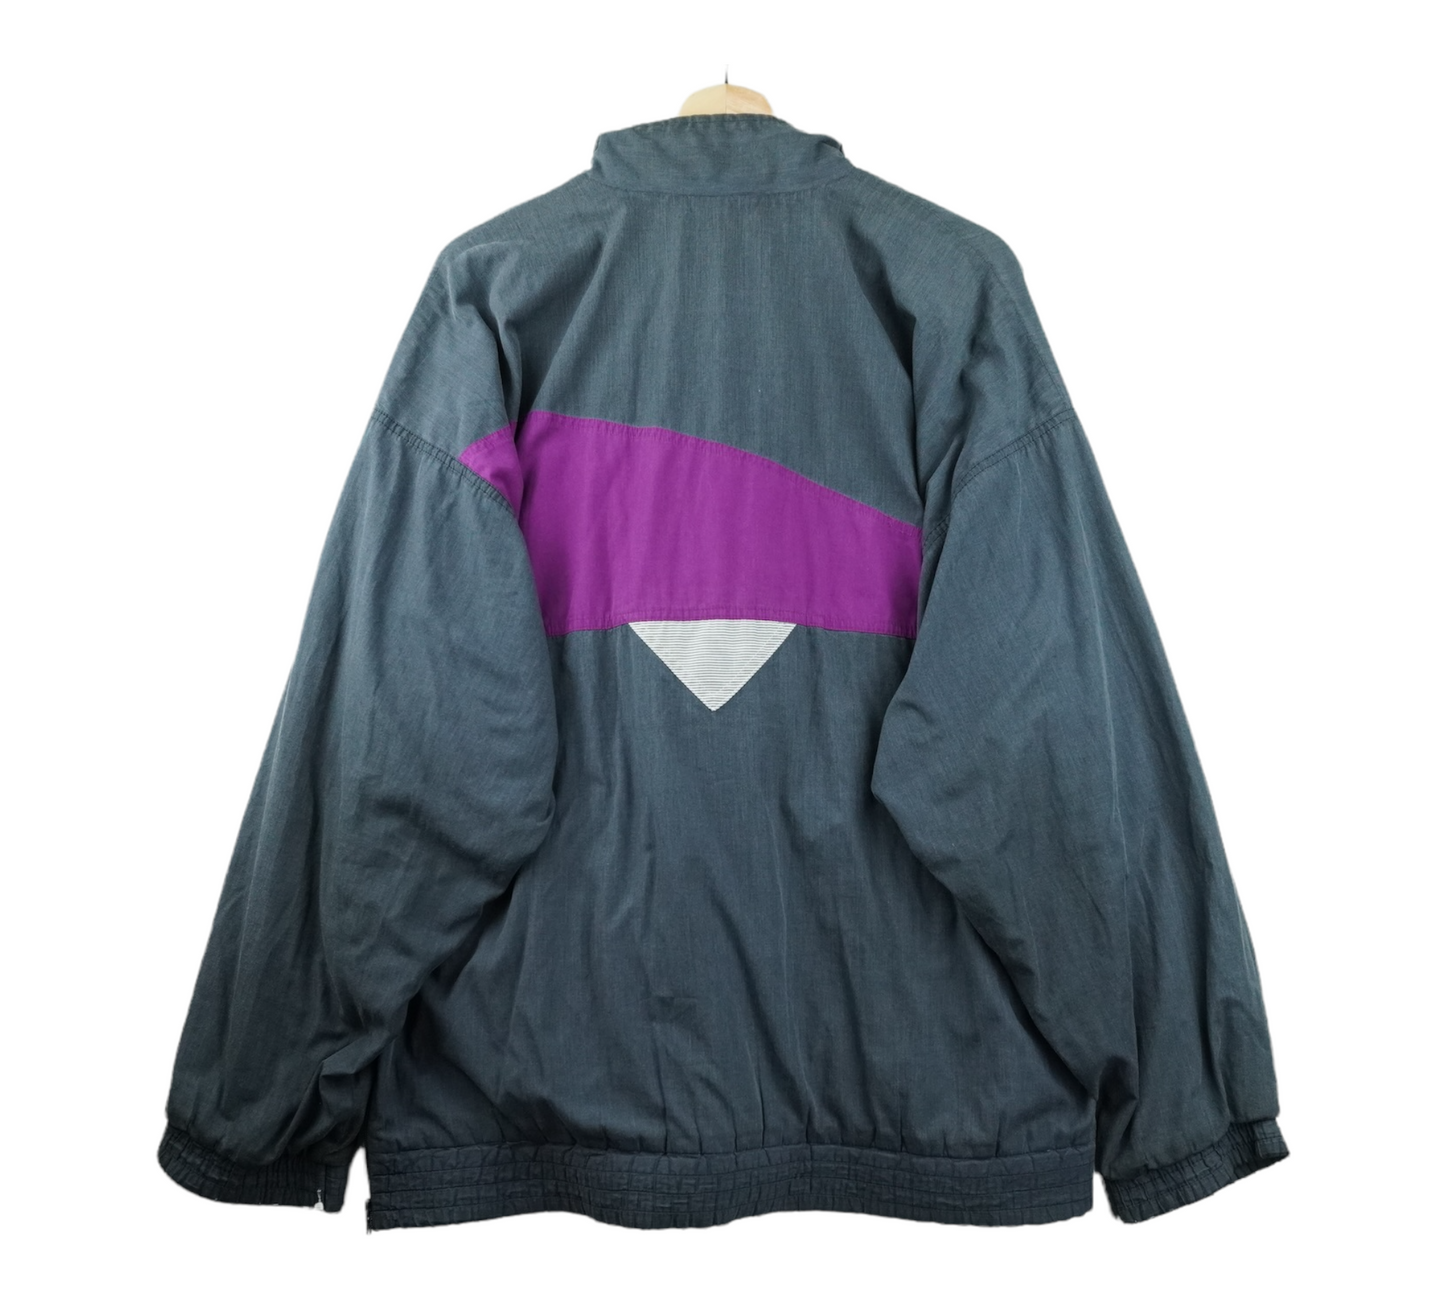 90s Adidas Jacket Grey Pink L